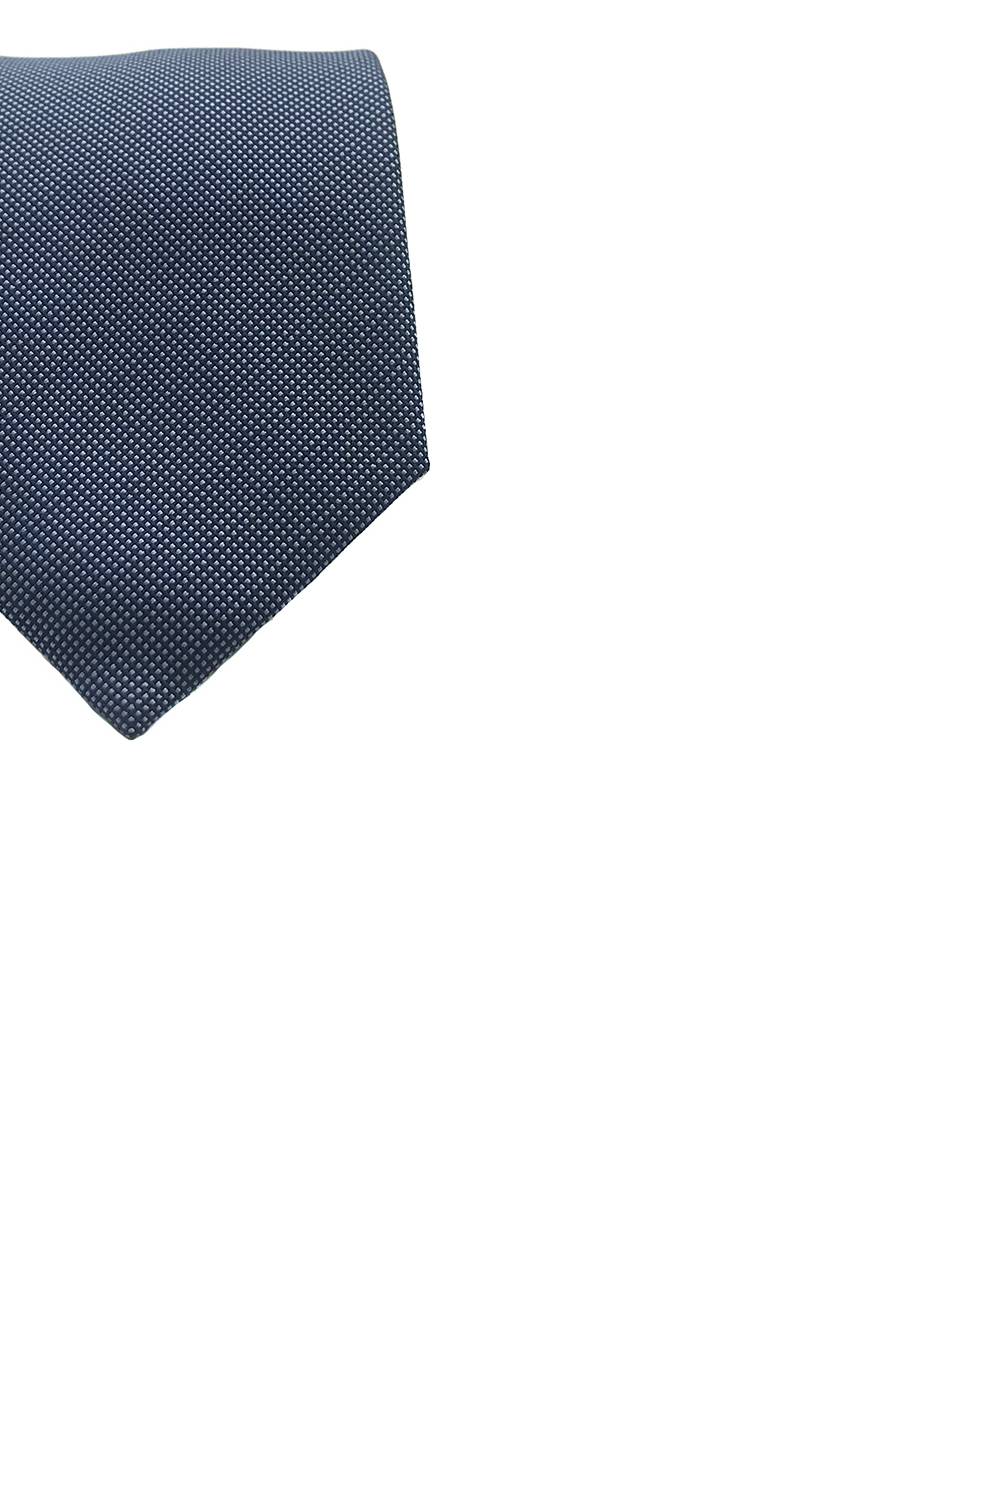 BASEMENT - Corbata Azul Marino Punto 7 Cm